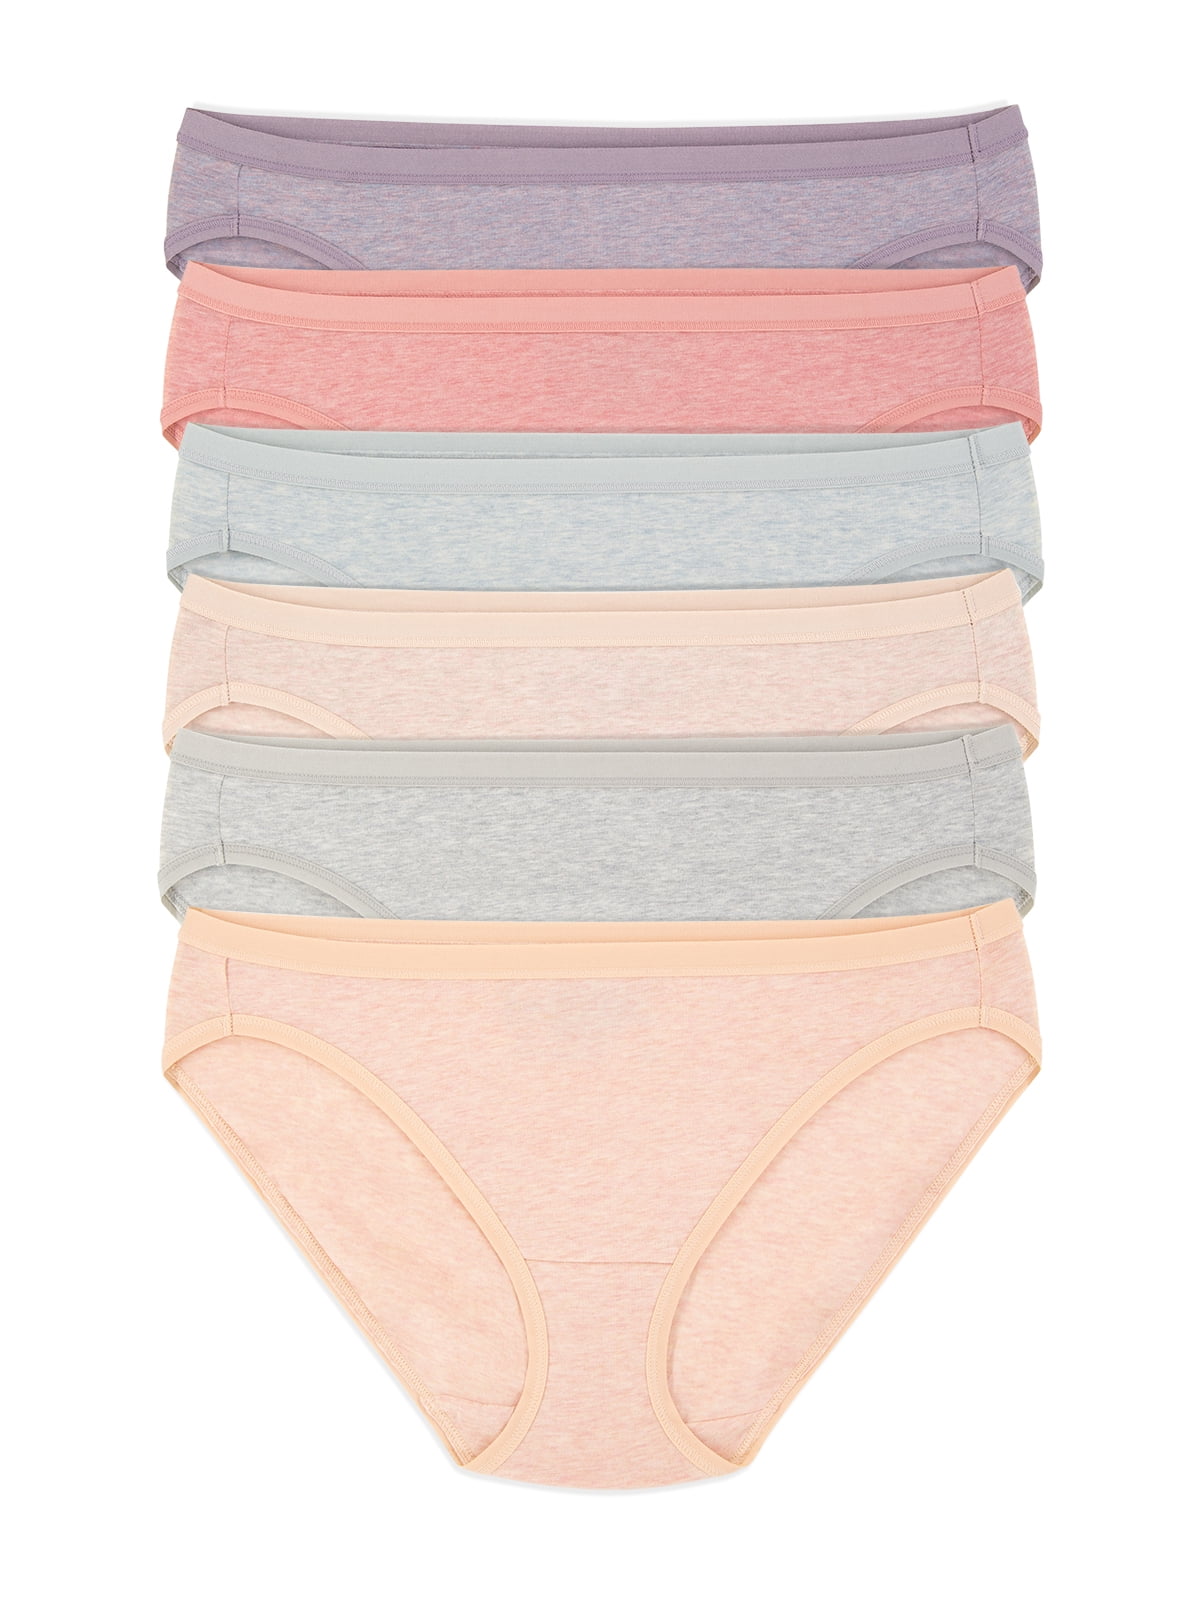 Felina Organic Cotton Bikini Underwear for Women - Bikini Panties for  Women, Seamless Panties for Women (6-Pack) (Fields of Joy, Large)